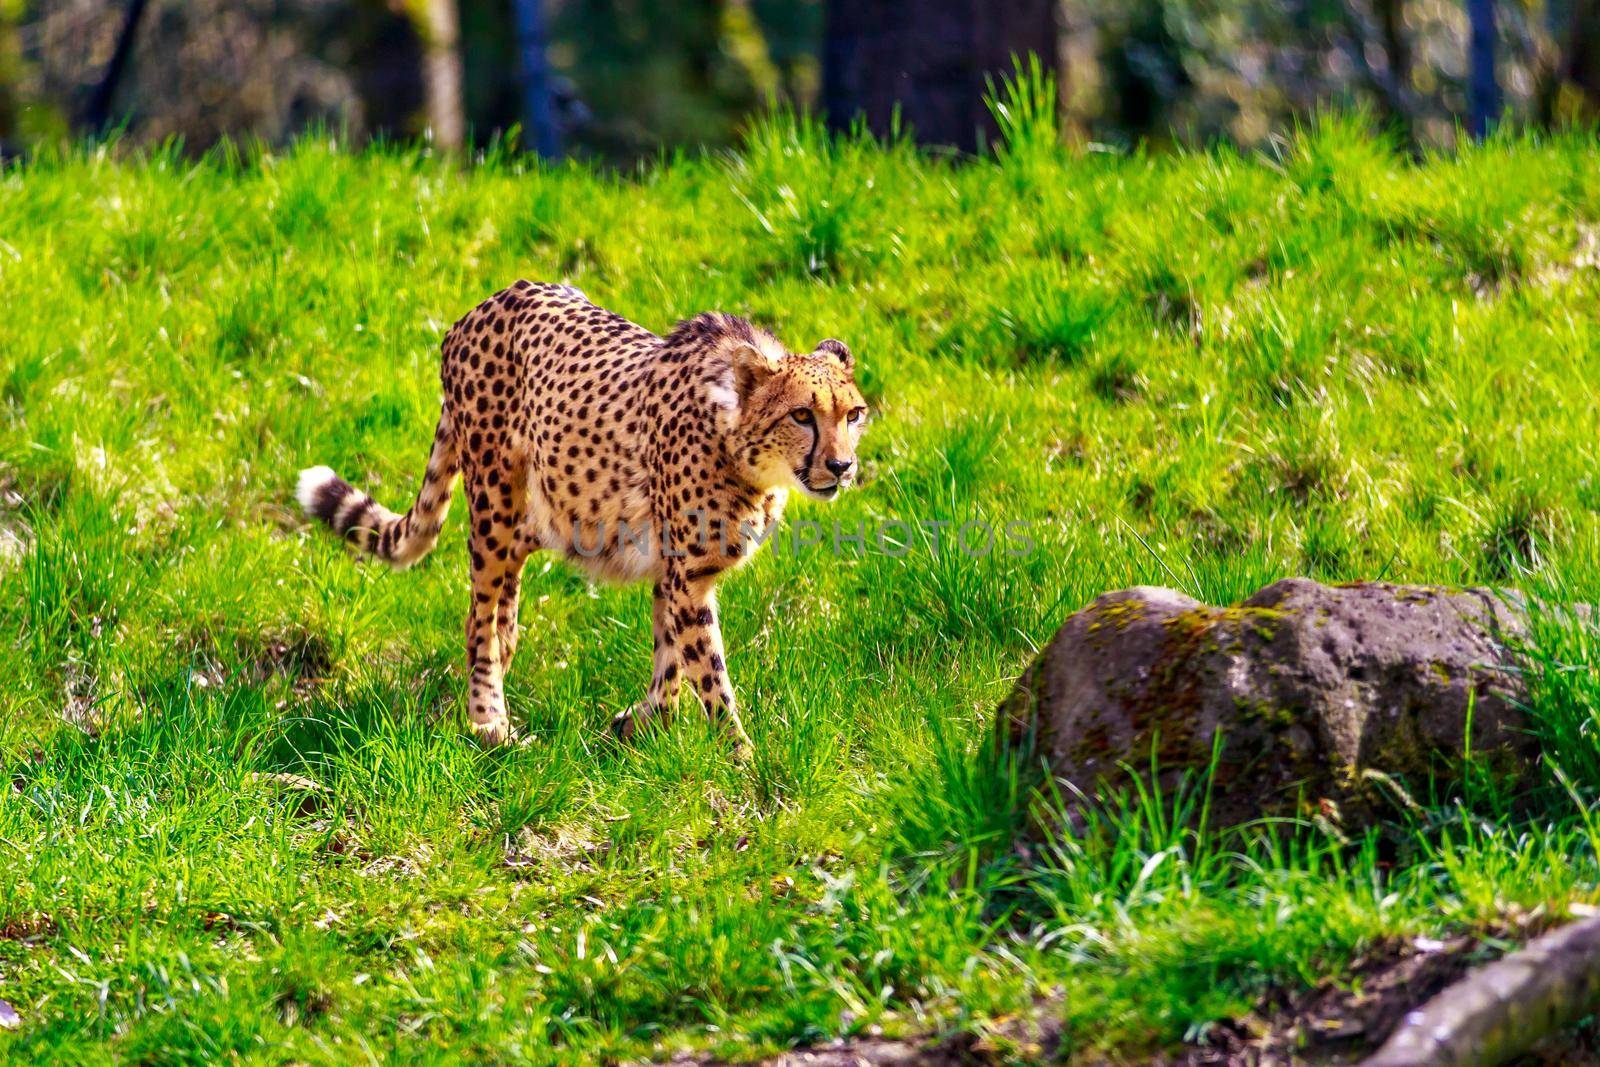 Serengeti cheetah strolls across the meadow, under the sun.